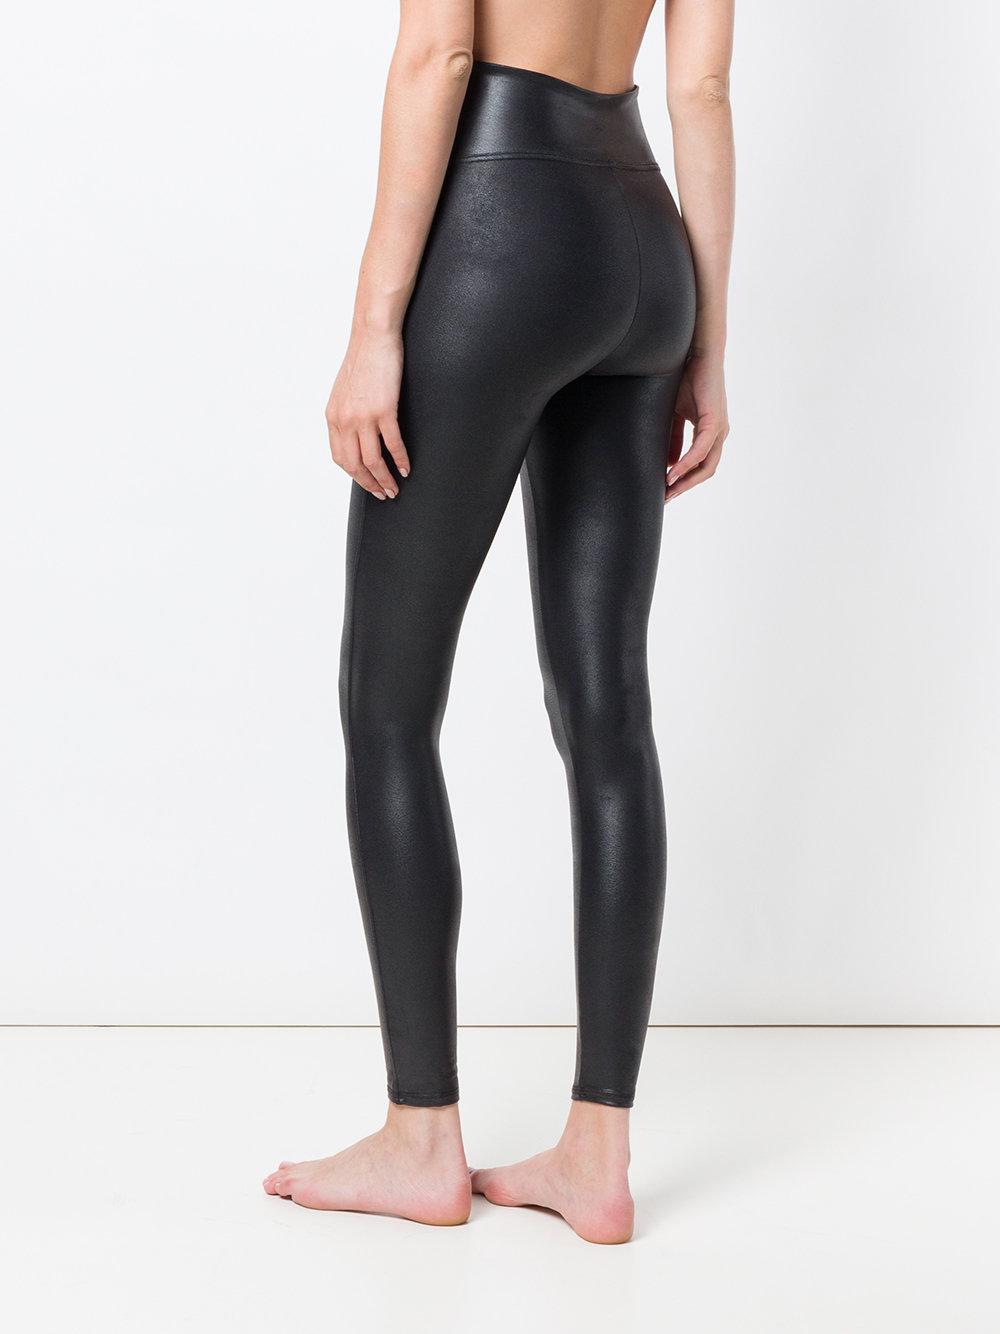 Lyst Spanx Shiny Slim Fit Leggings In Black 4406